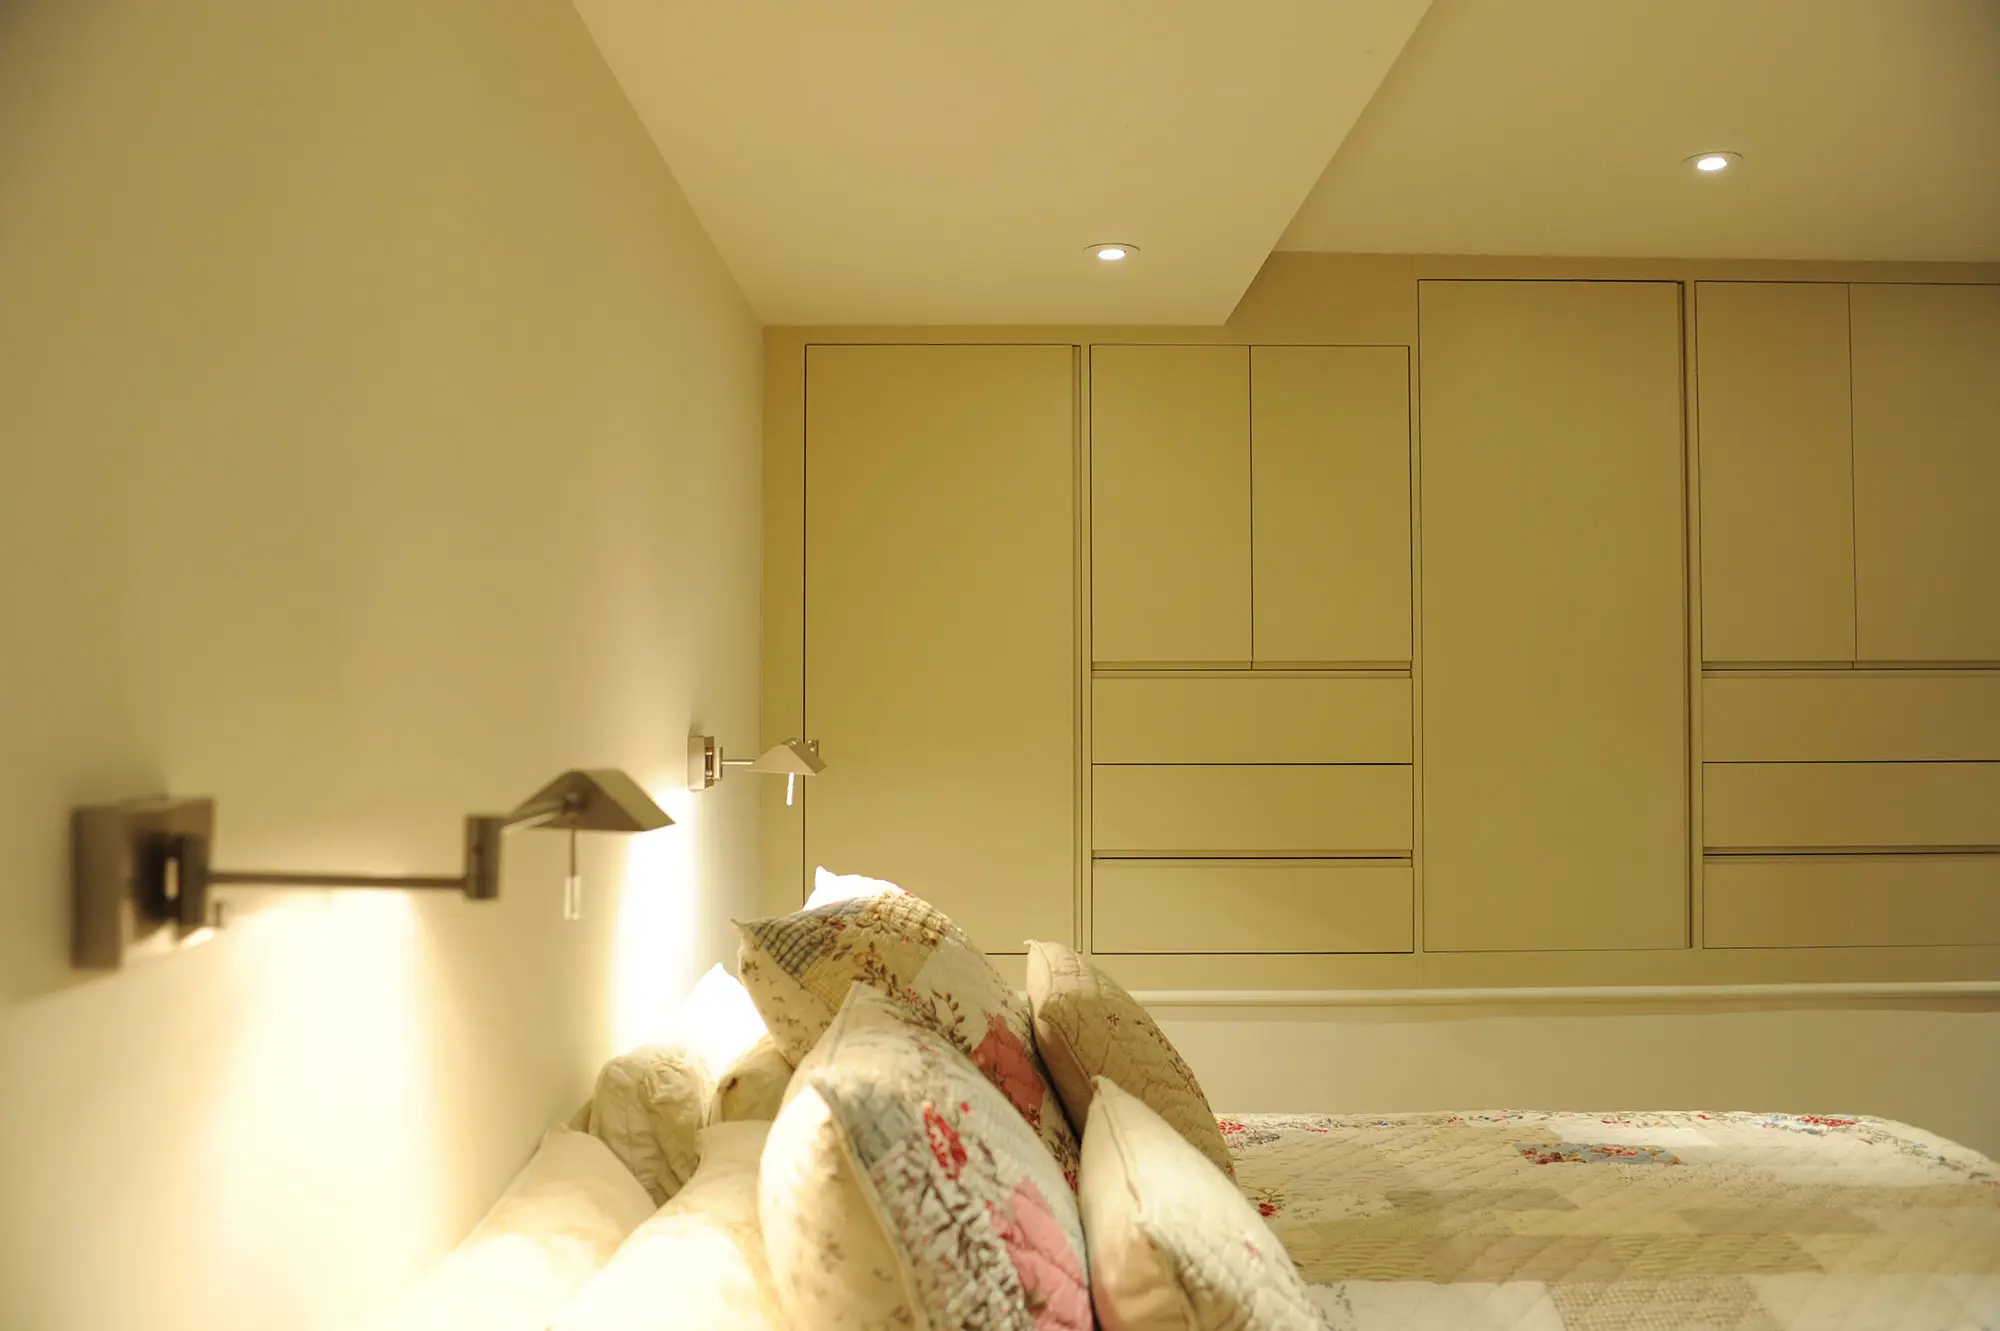 Project London living - Bedroom